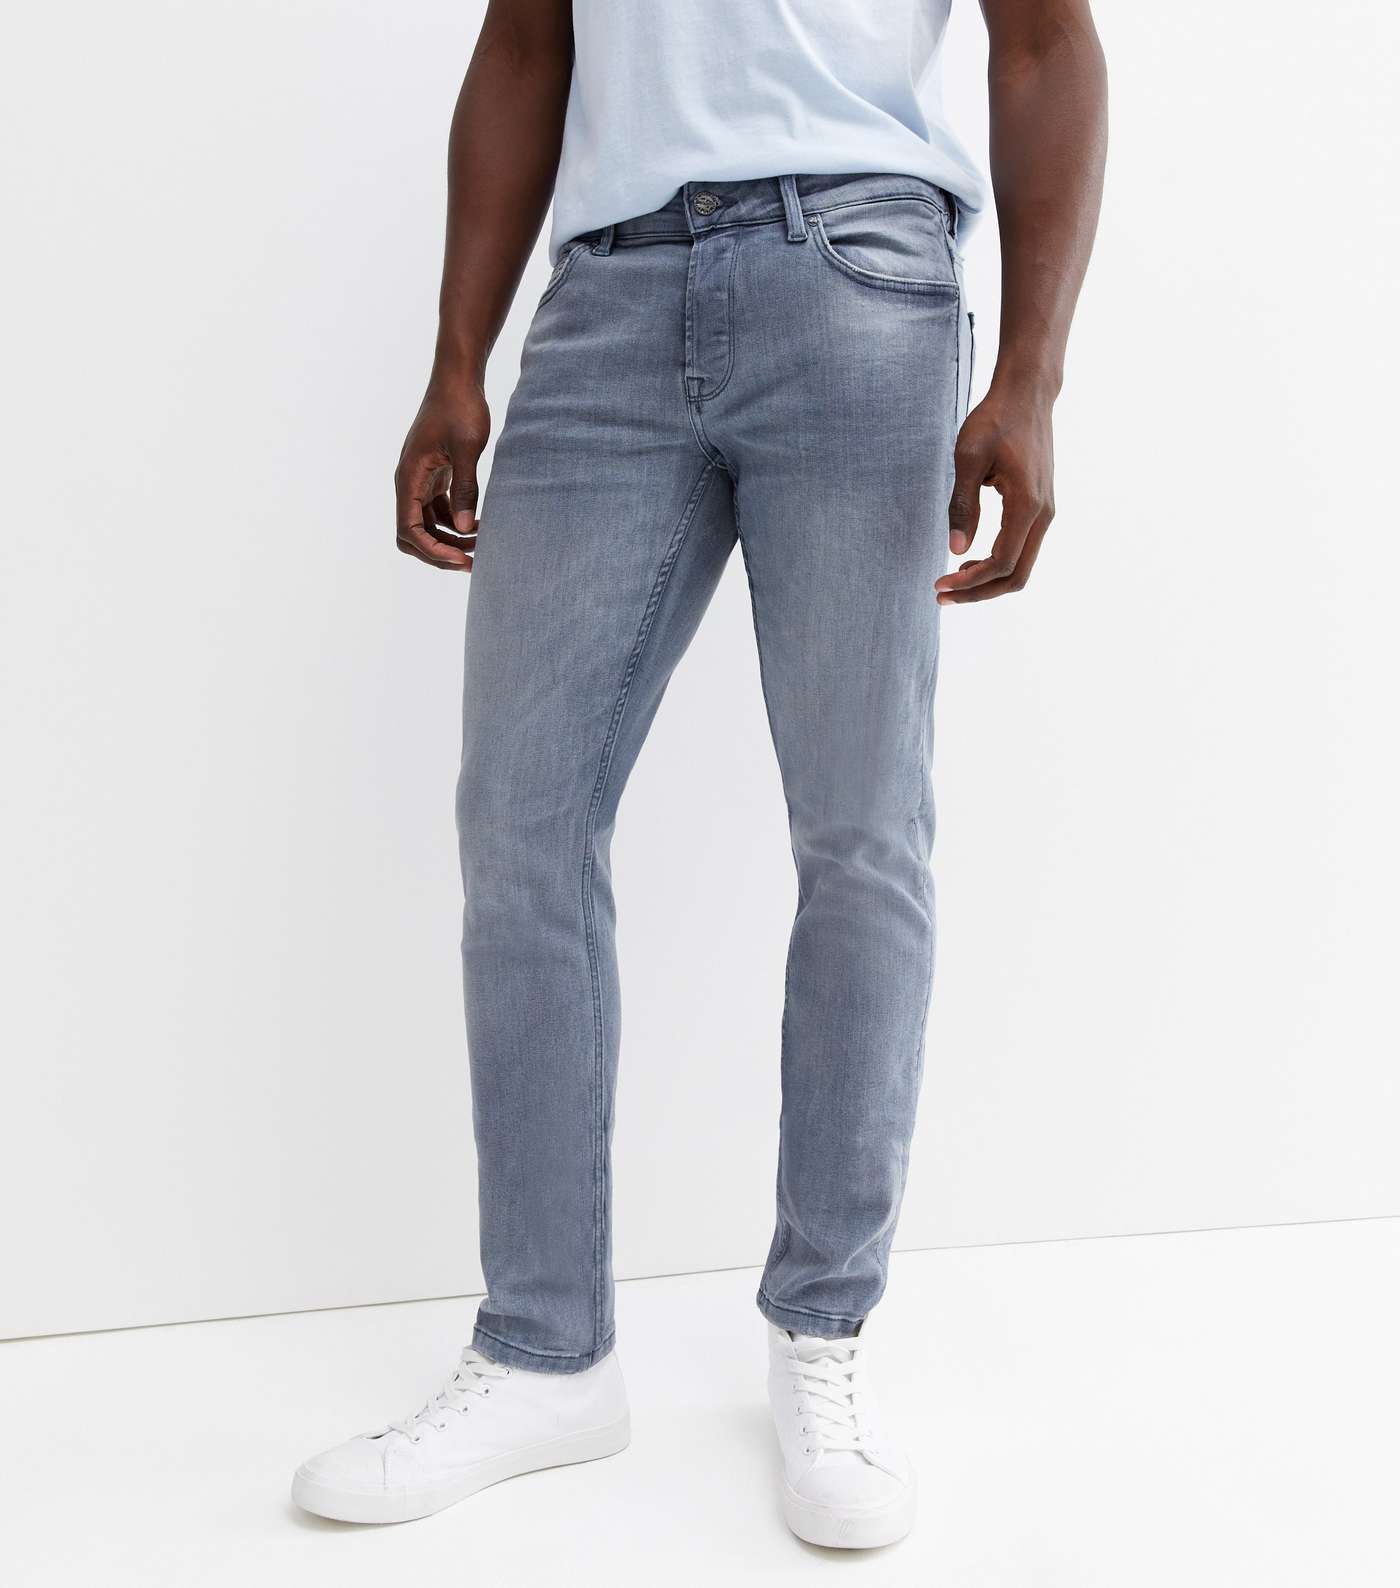 Only & Sons Grey Acid Wash Slim Fit Jeans Image 2